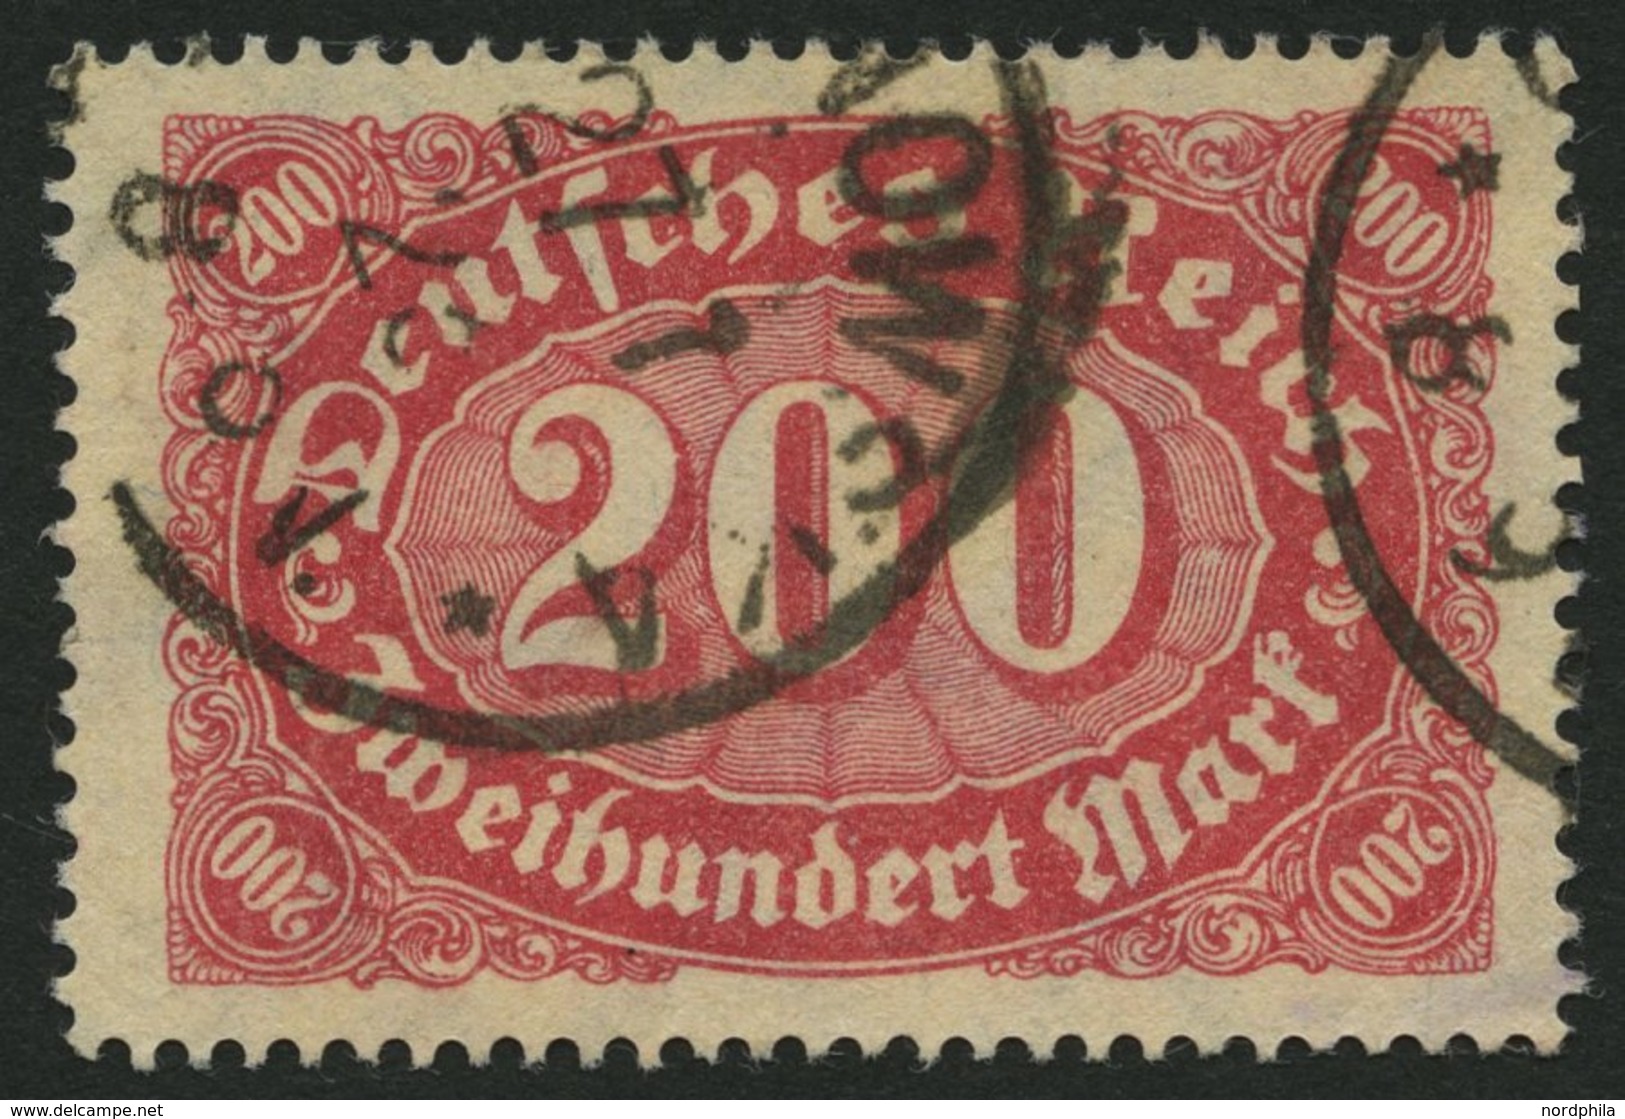 Dt. Reich 248b O, 1923, 200 M. Rotlila, Eckbug Sonst Pracht, Gepr. Infla, Mi. 100.- - Usati